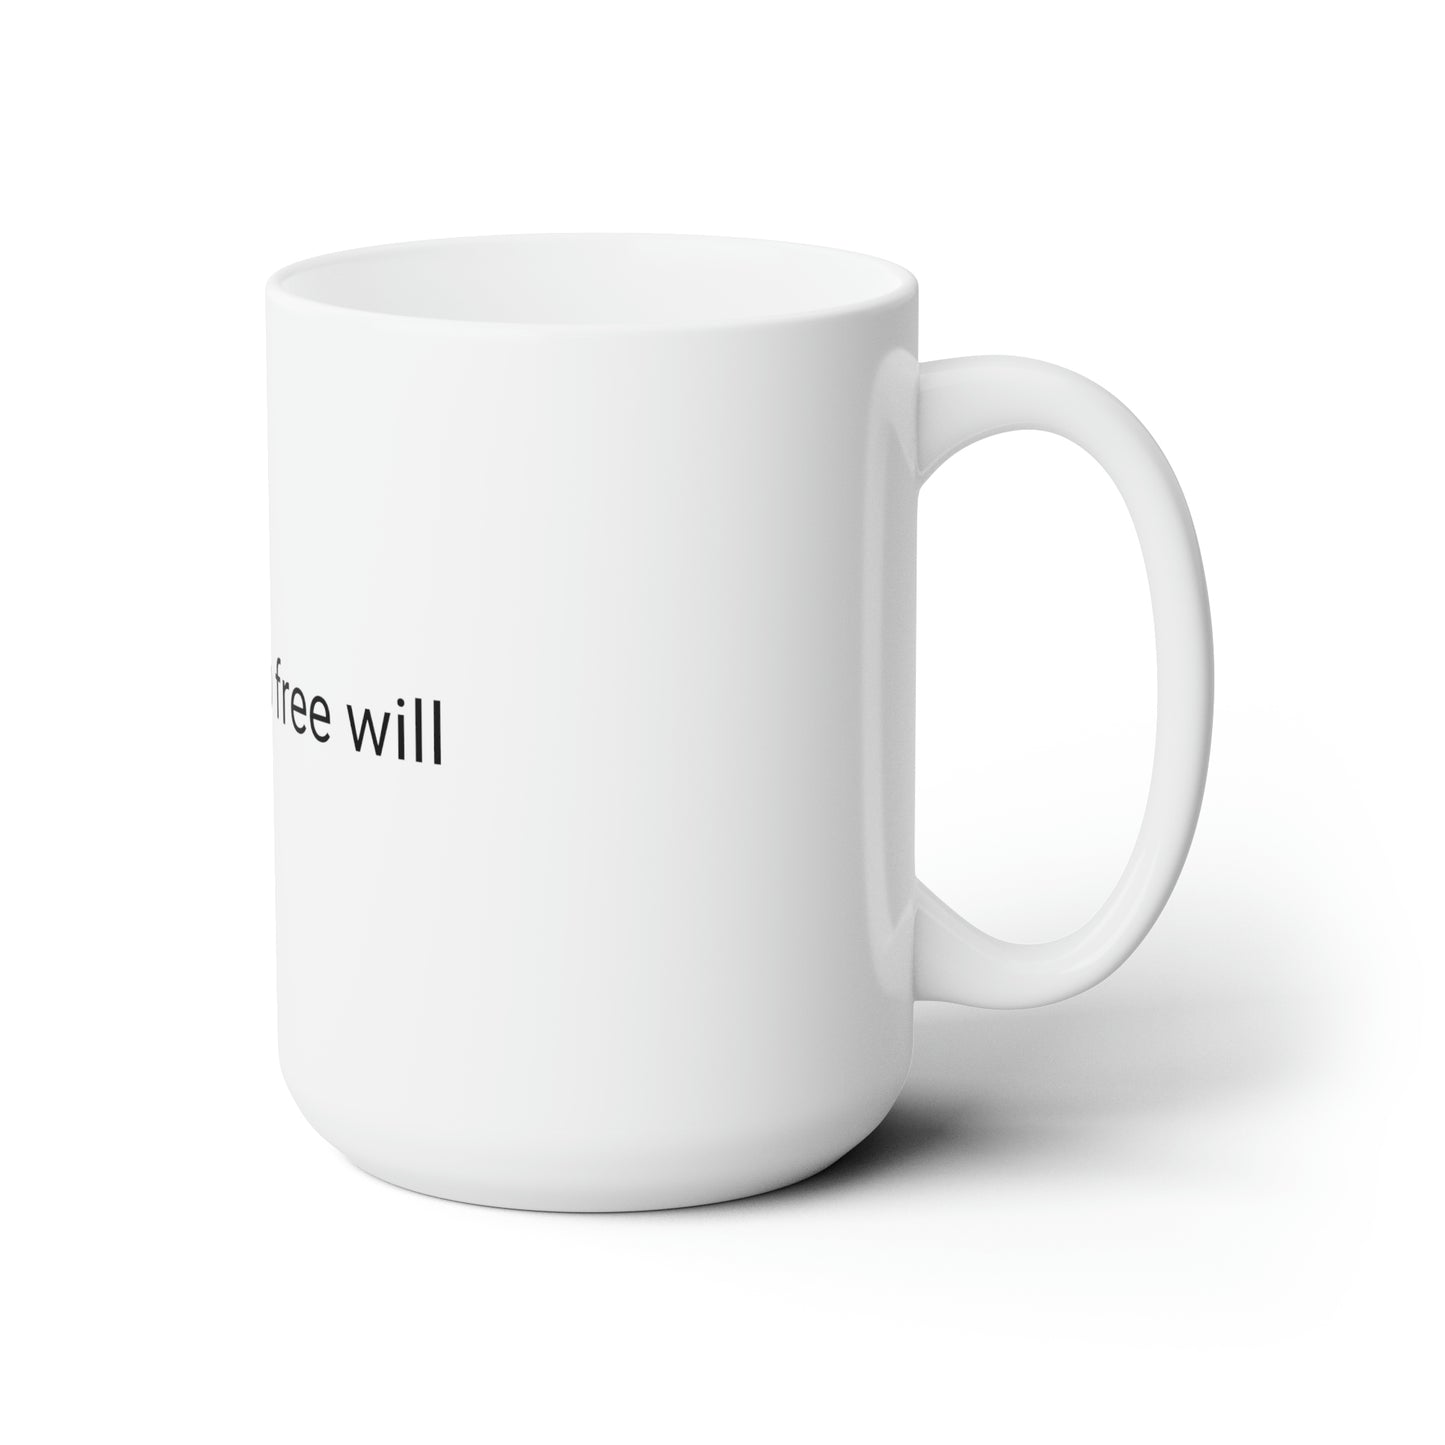 There is no free will - Ceramic Mug 15oz